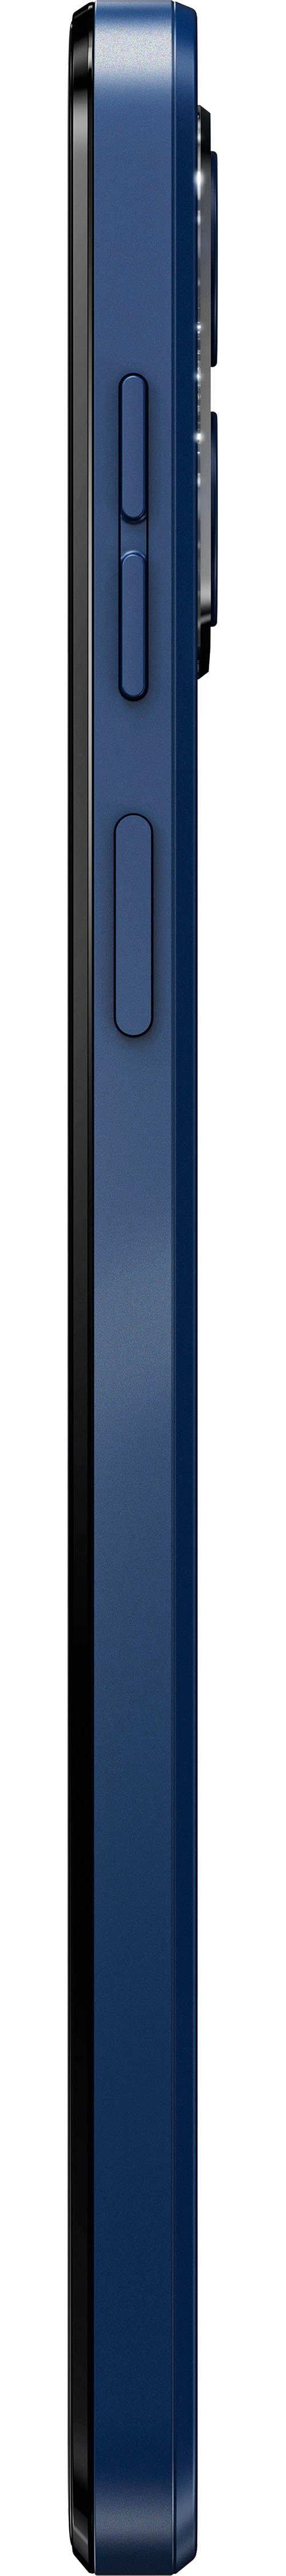 Motorola moto Speicherplatz, g14 cm/6,5 Zoll, 128 Kamera) Sky GB 50 MP Smartphone Blue (16,51